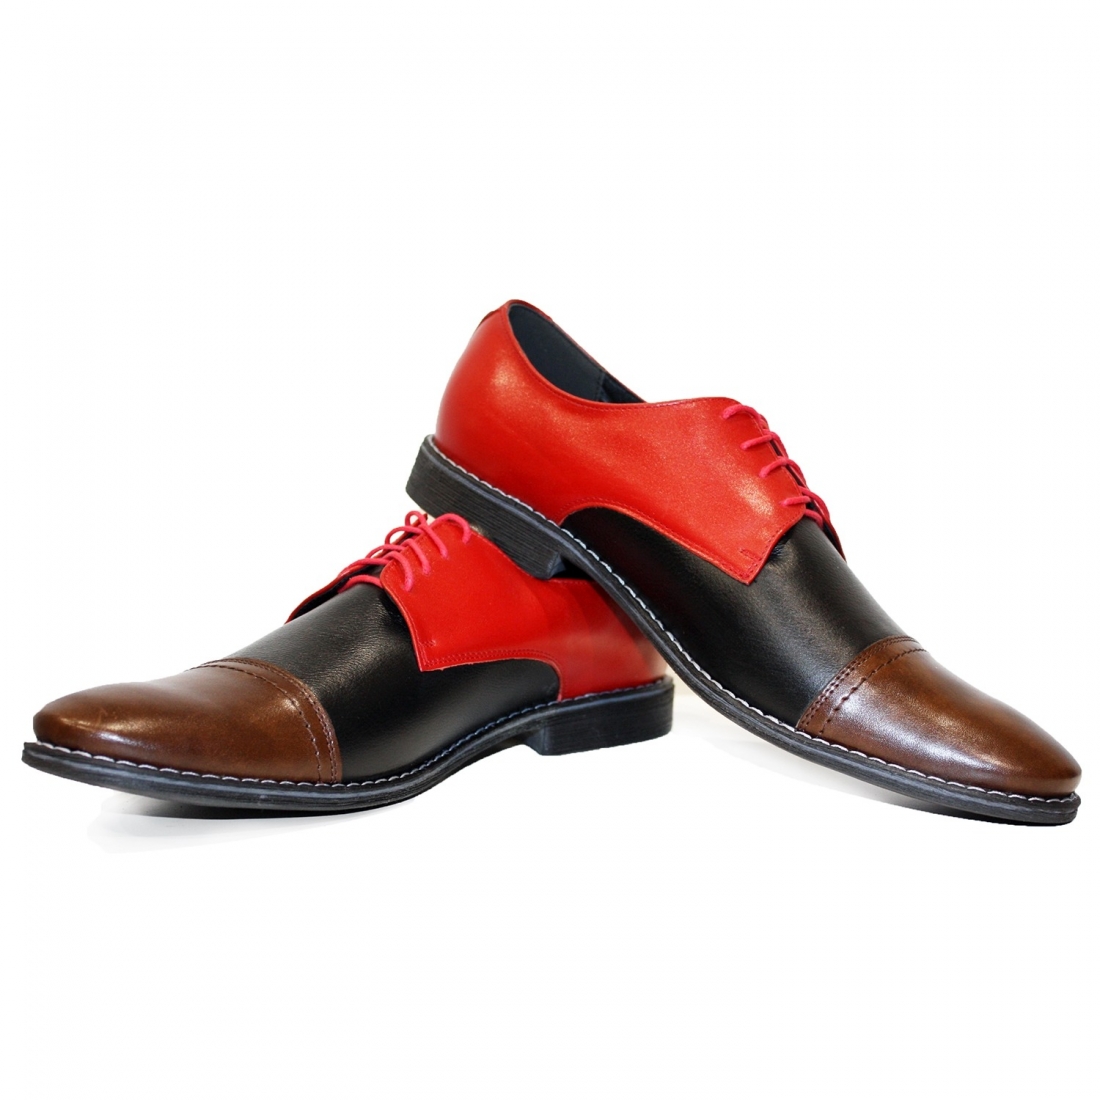 Modello Pabirreto - Classic Shoes - Handmade Colorful Italian Leather Shoes